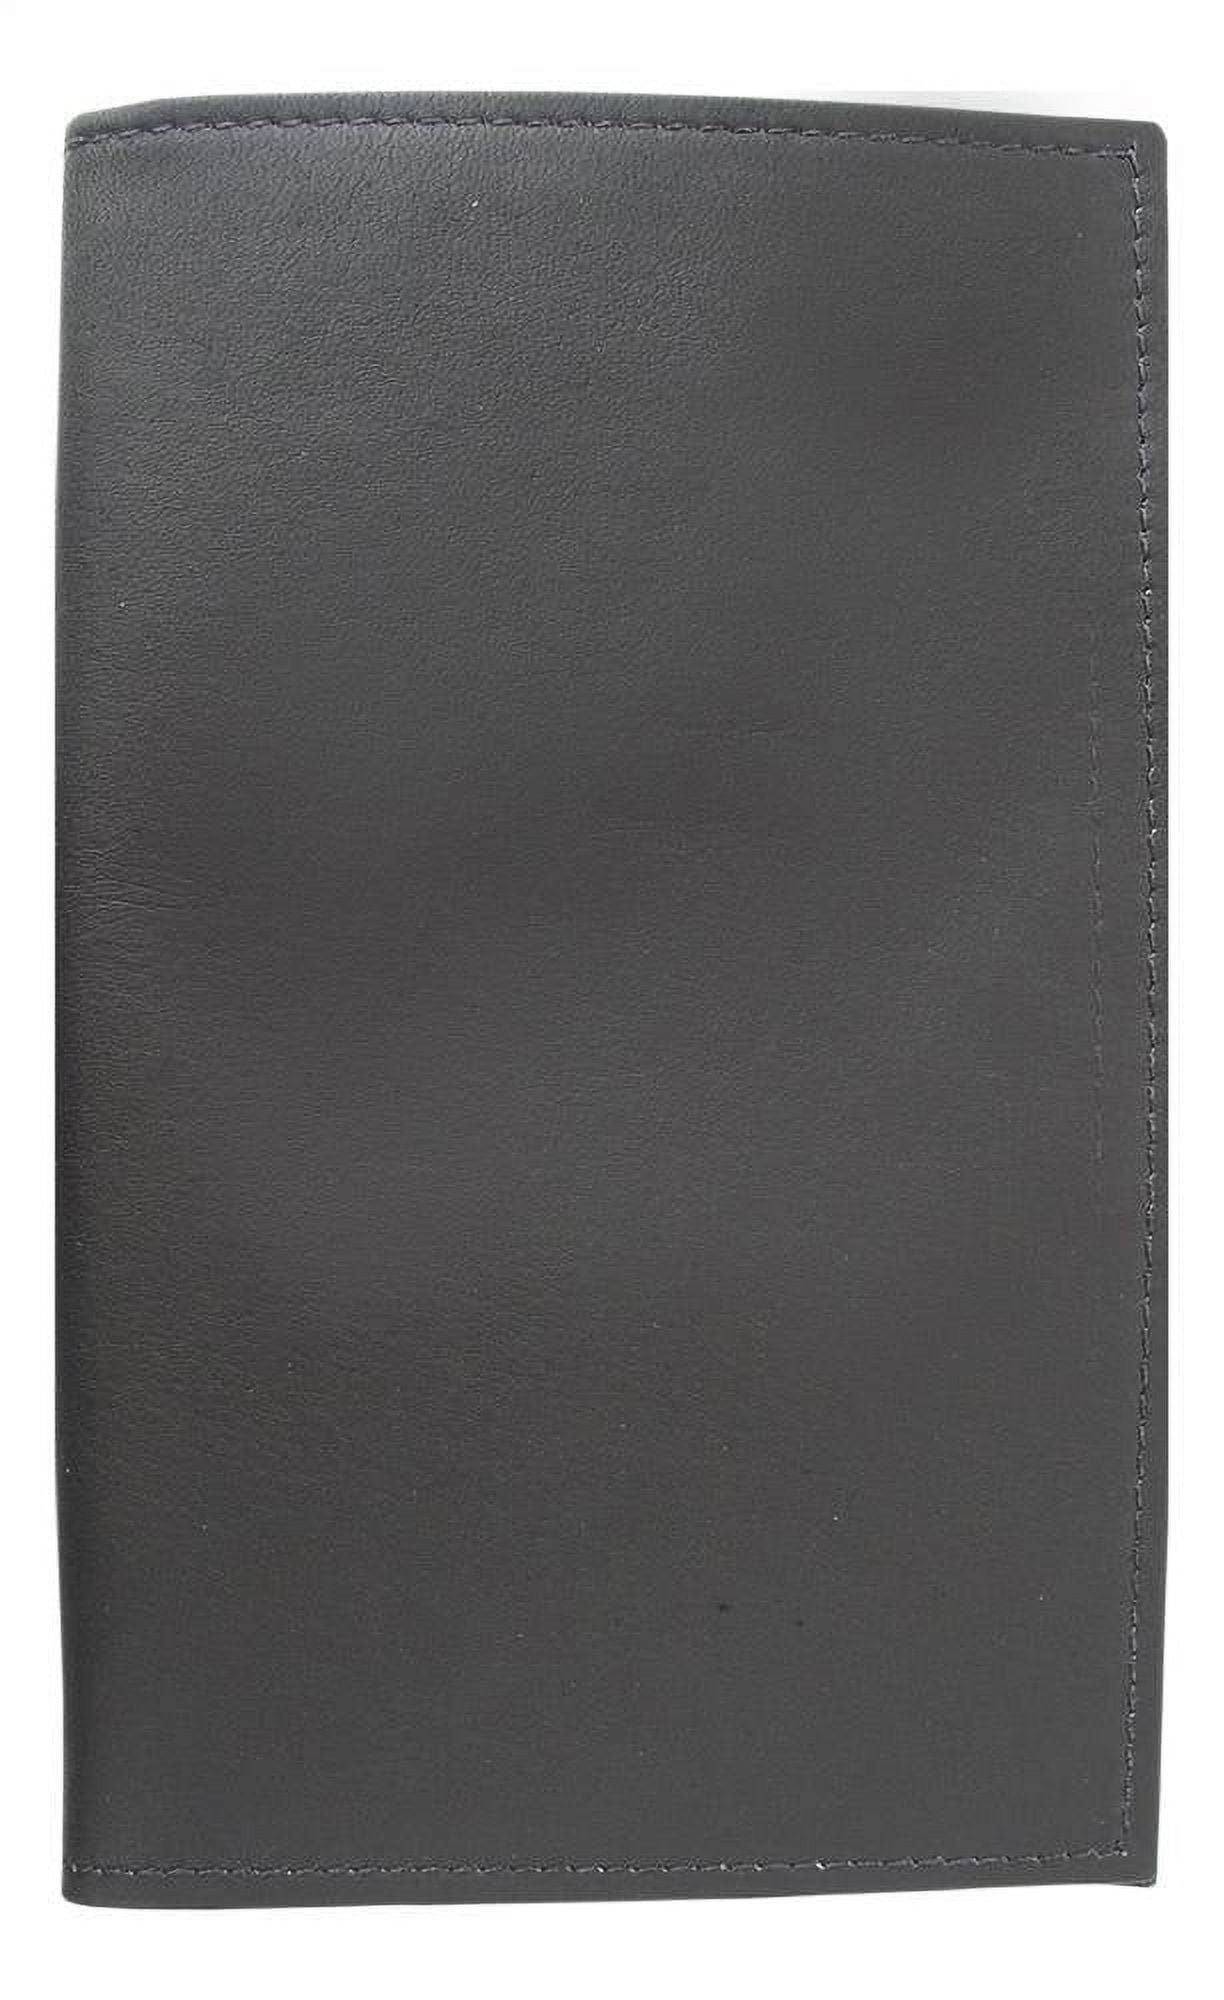 Piel Leather Vertical Score Card Cover - Walmart.com